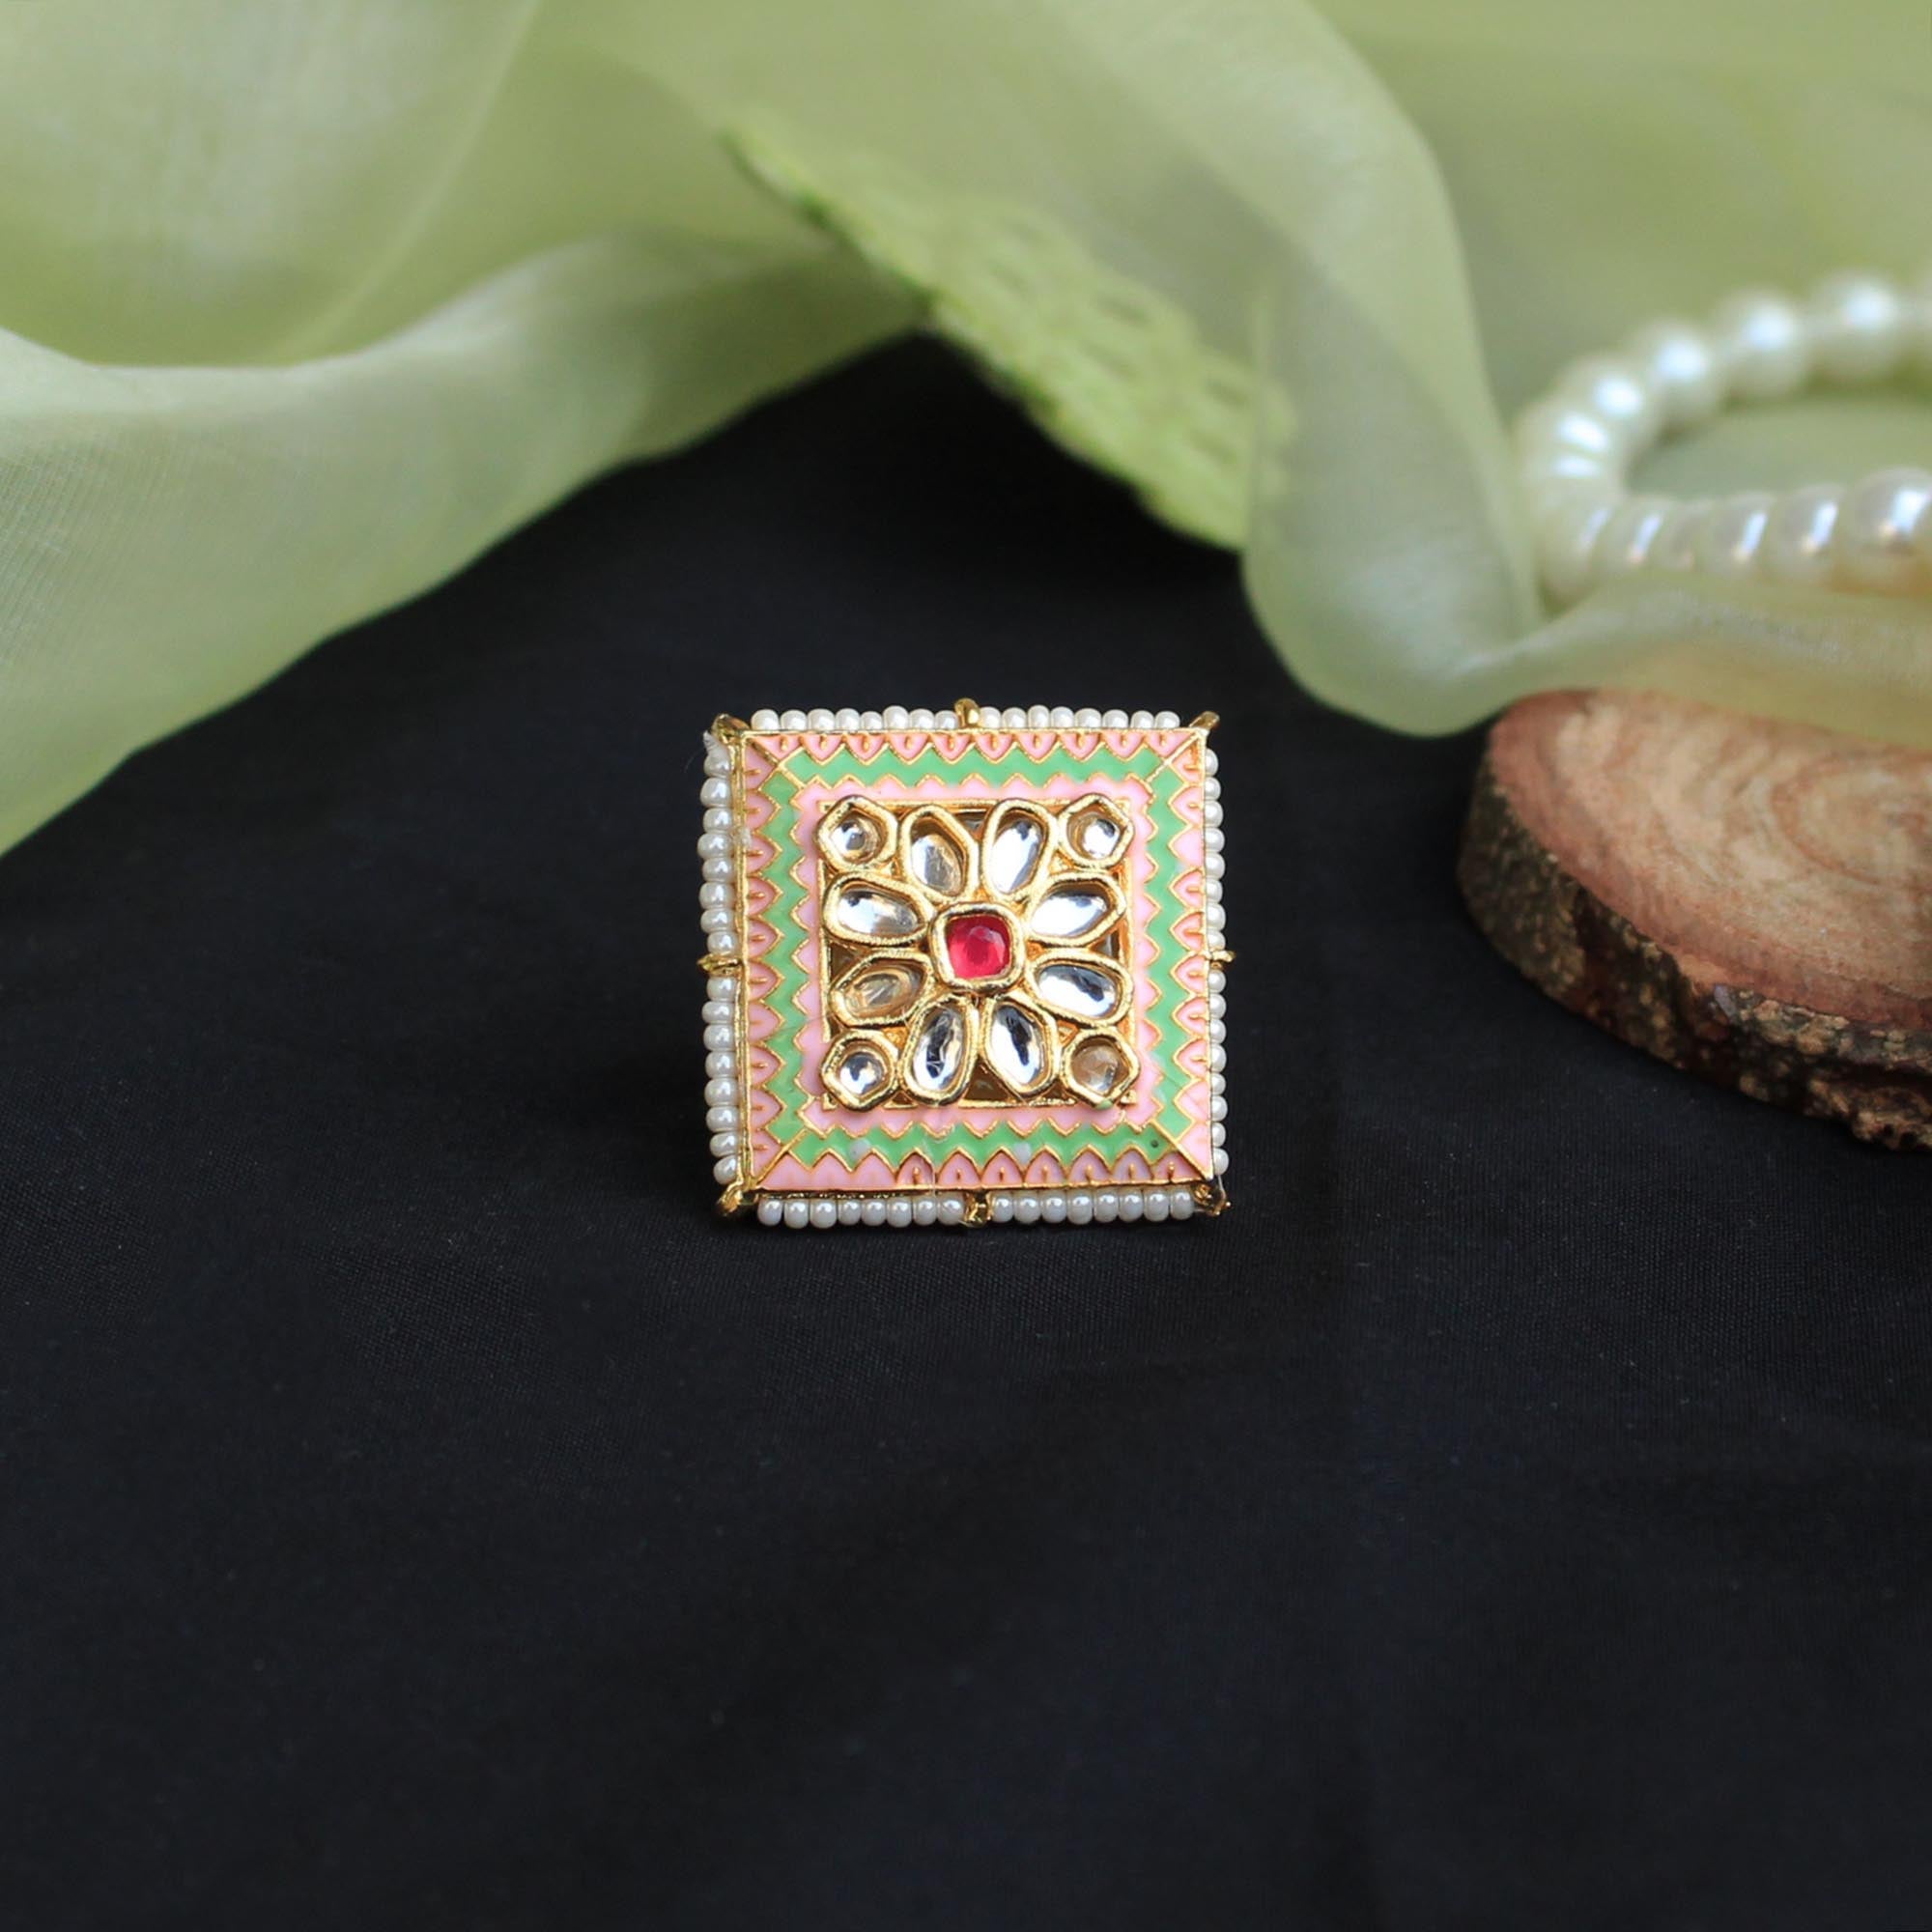 Women's Wedding Square Design Diamond Ring at Rs 15000 in Surat | ID:  17387887373